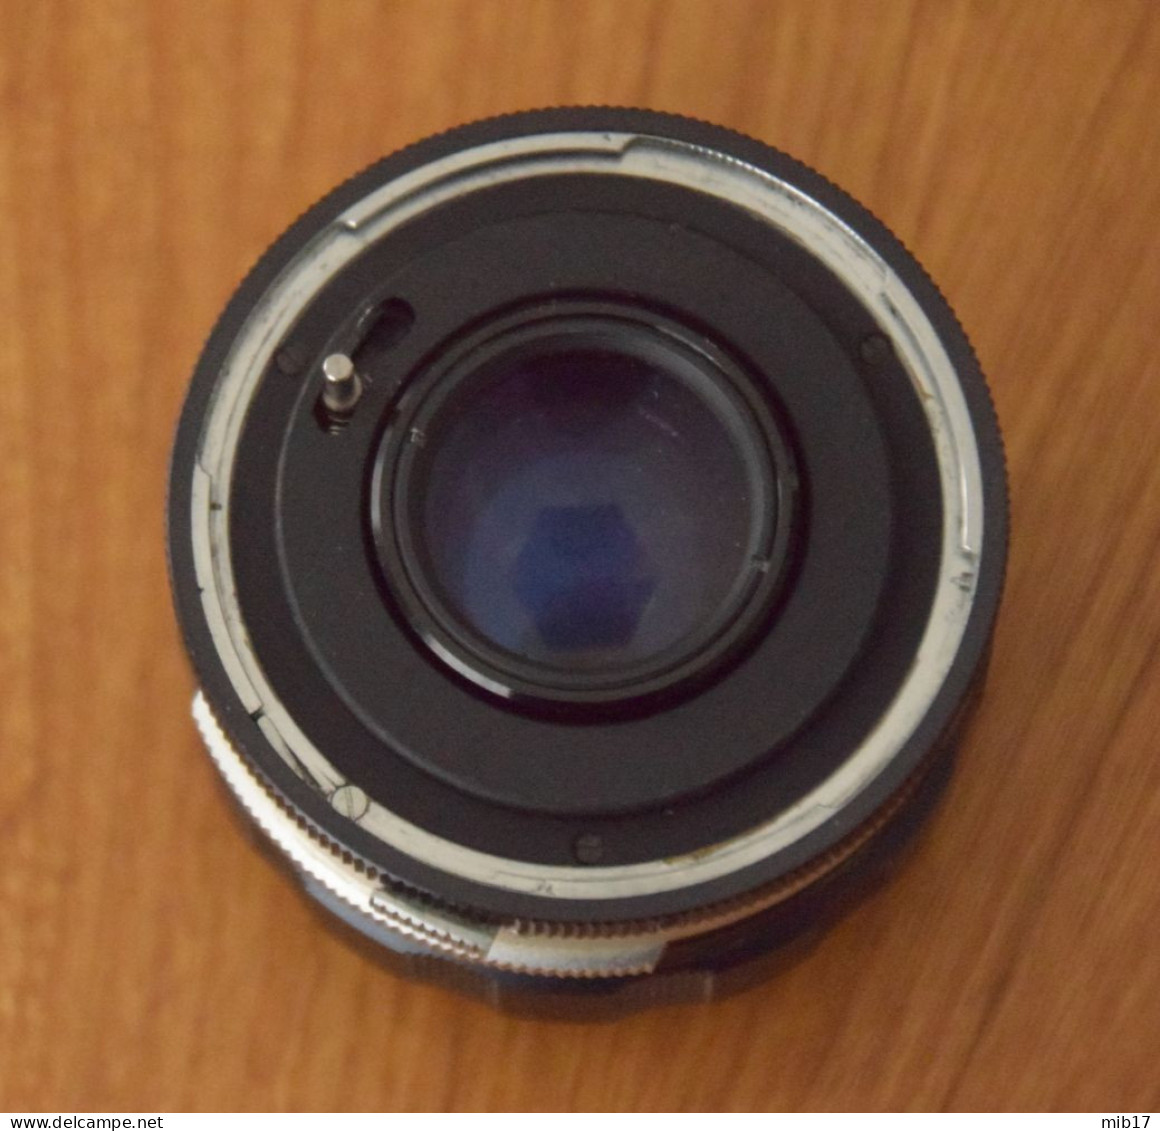 ancien appareil photo reflex MIRANDA Sensomat RE - boitier, objectif 50mm et sacoche  film 135 24x36